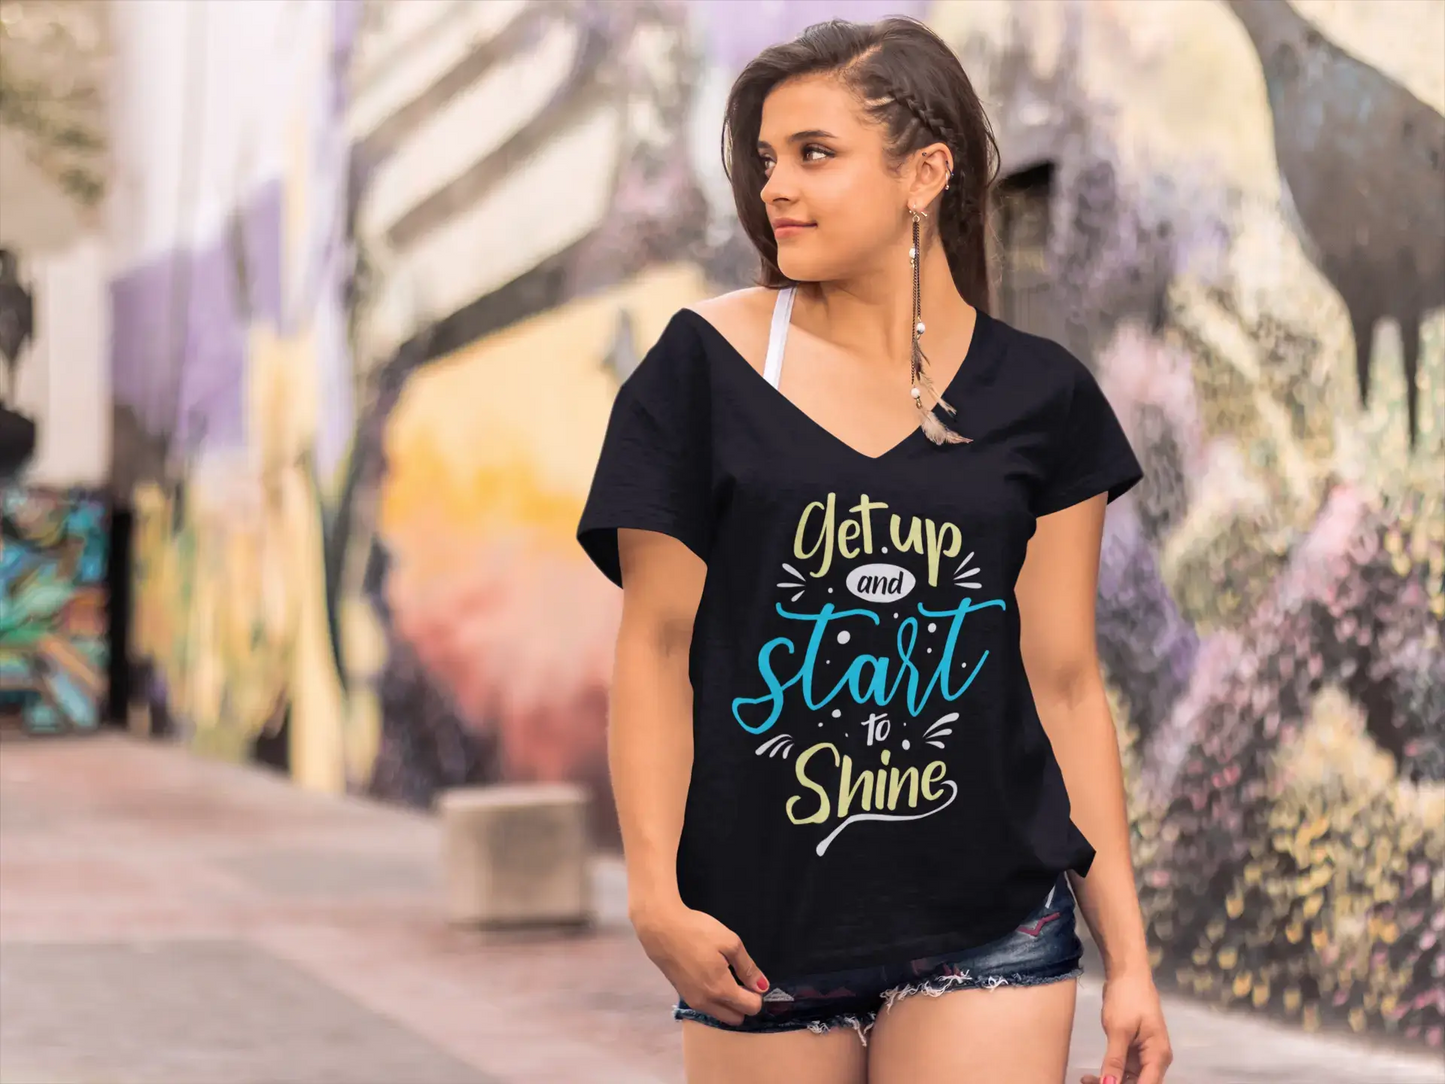 ULTRABASIC Women's T-Shirt Get Up and Start to Shine - Motivational Quote Shirt